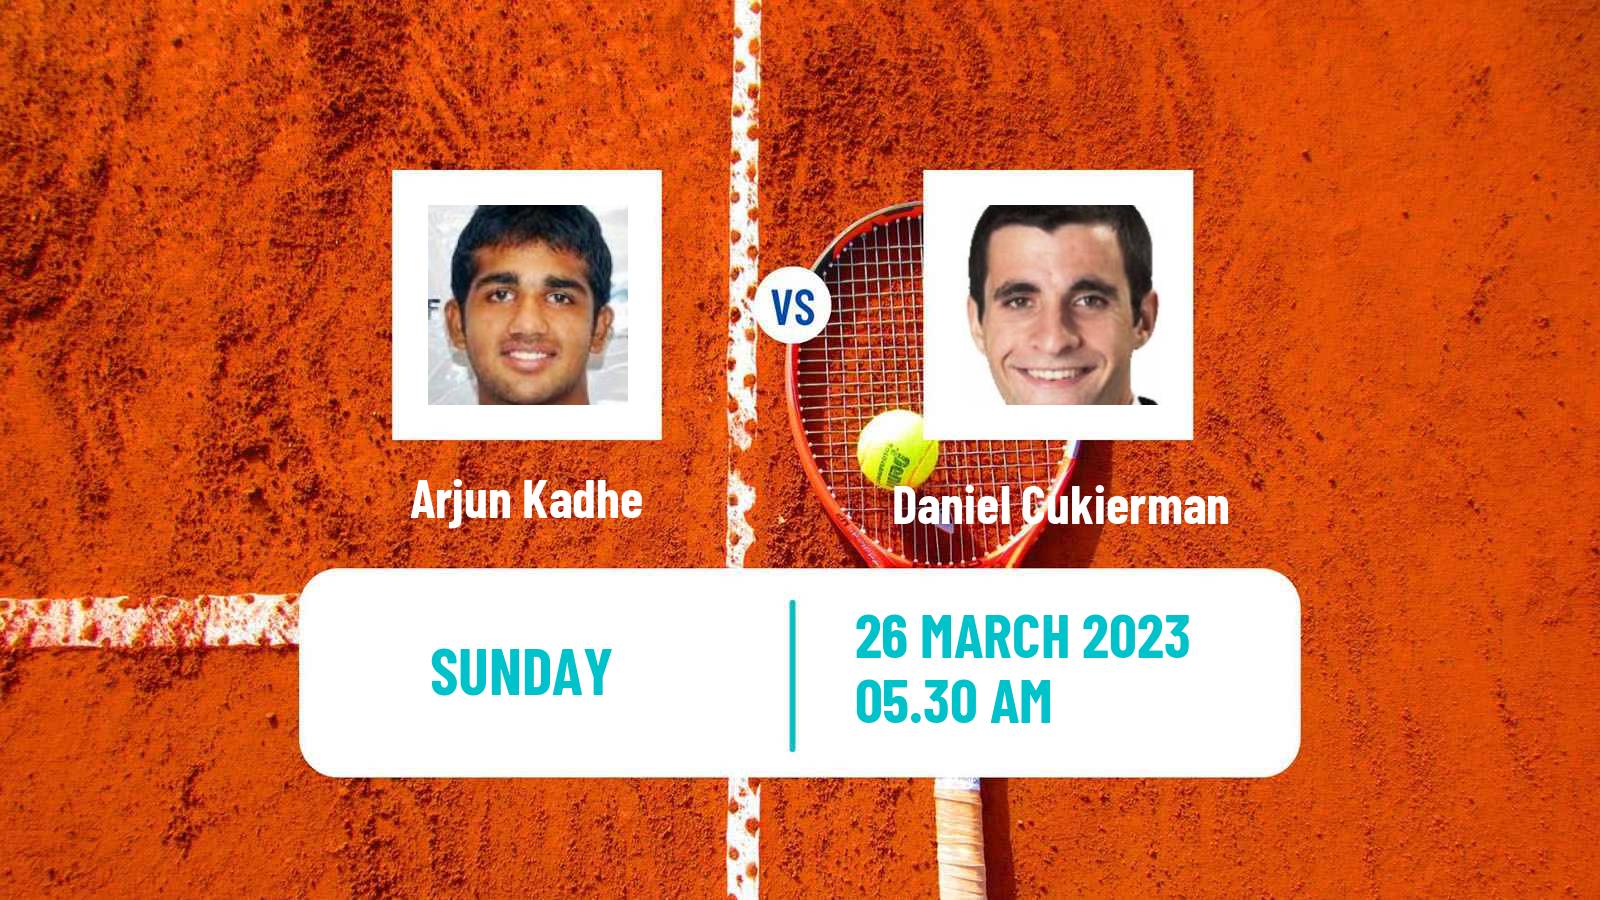 Tennis ATP Challenger Arjun Kadhe - Daniel Cukierman